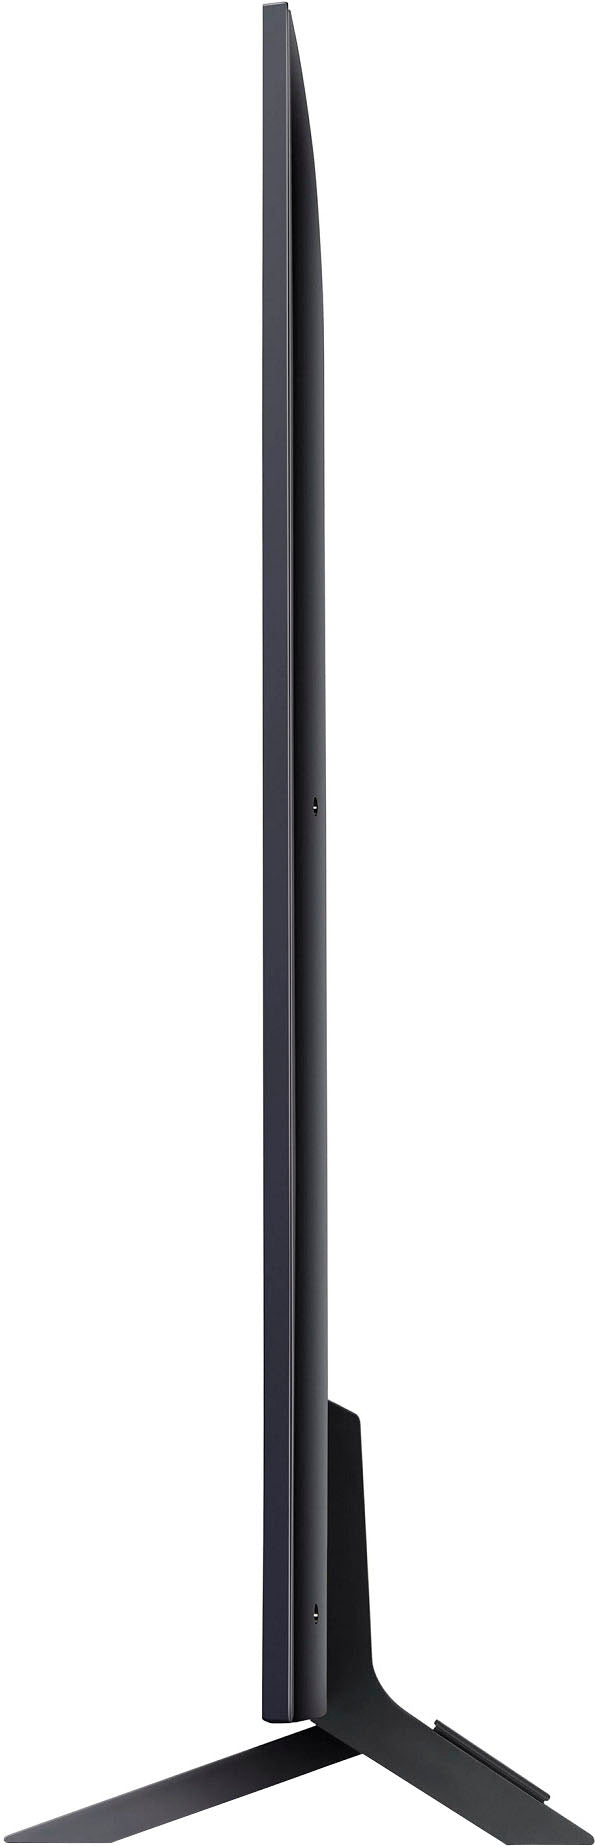 LG - 55” Class UR9000 Series LED 4K UHD Smart webOS TV_11